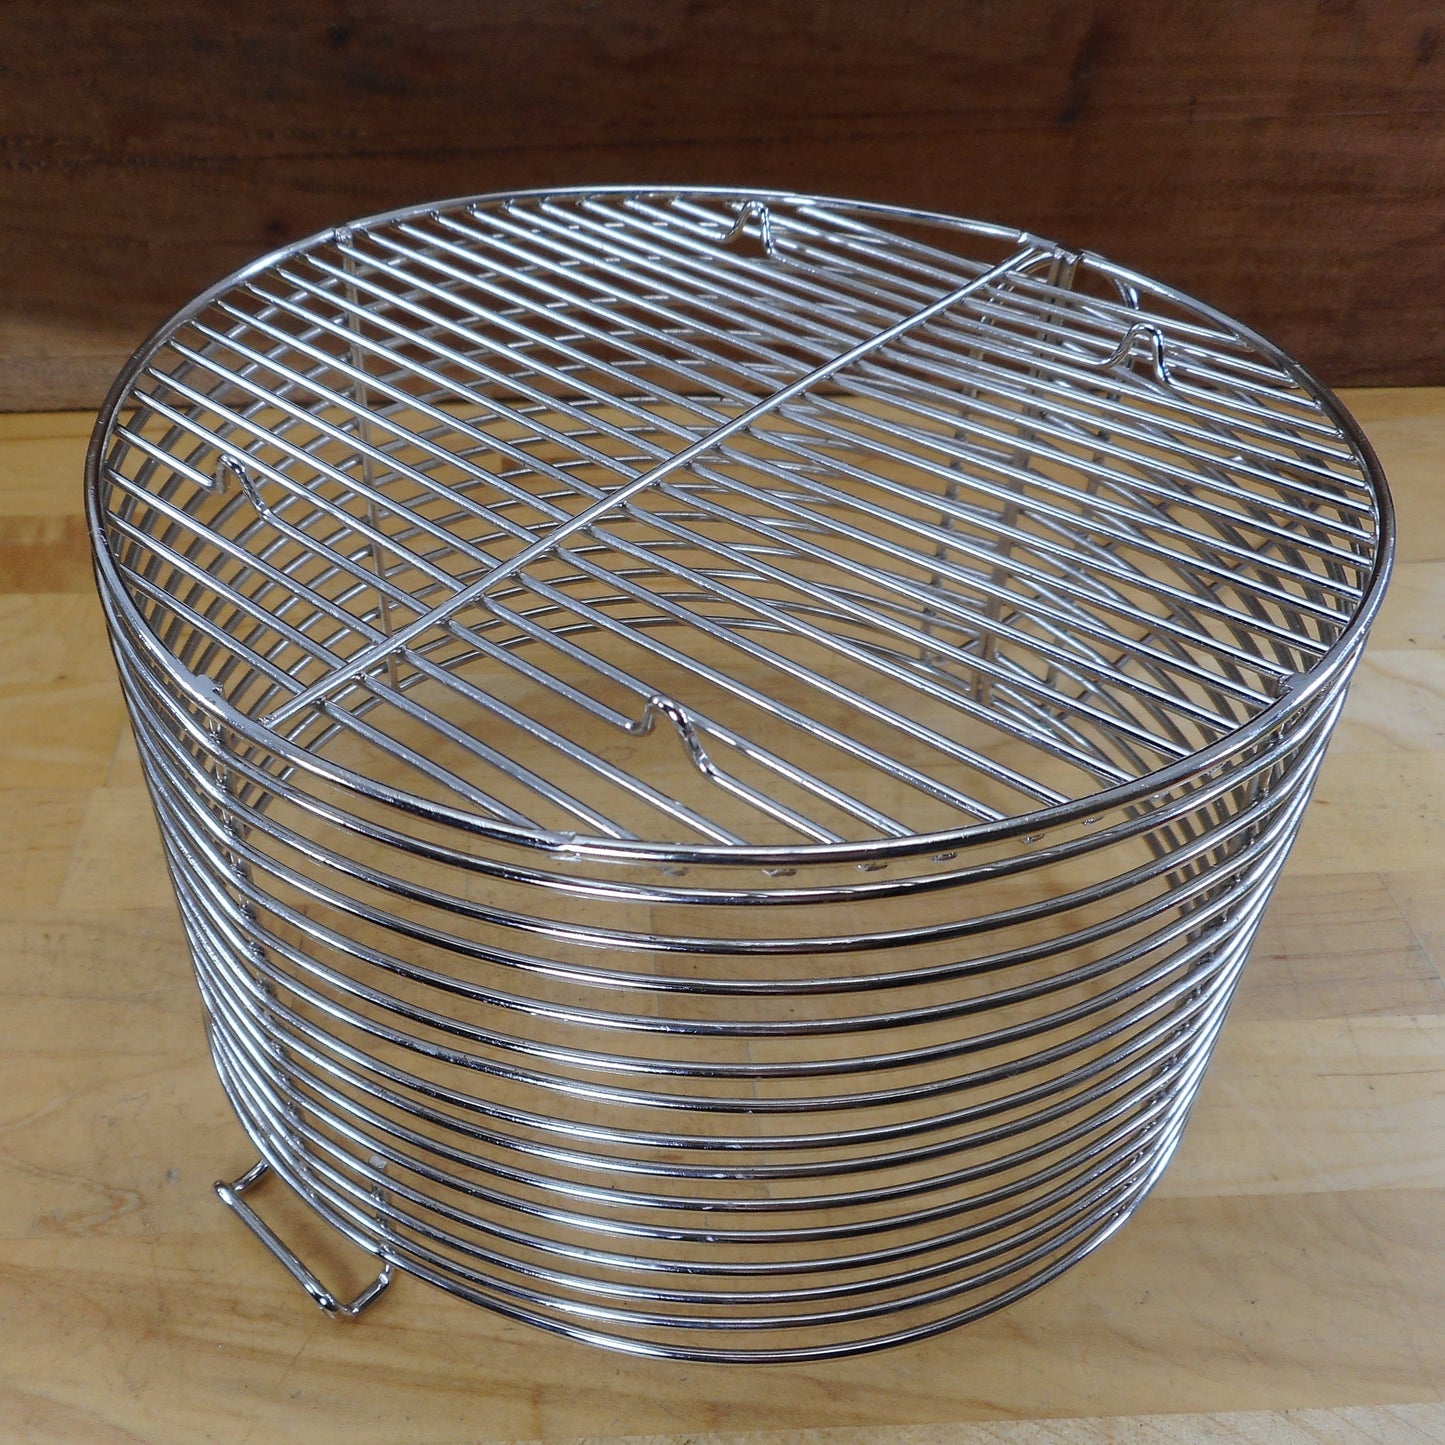 Fry Basket 4 Quart Stainless Steel 8" Round Bar